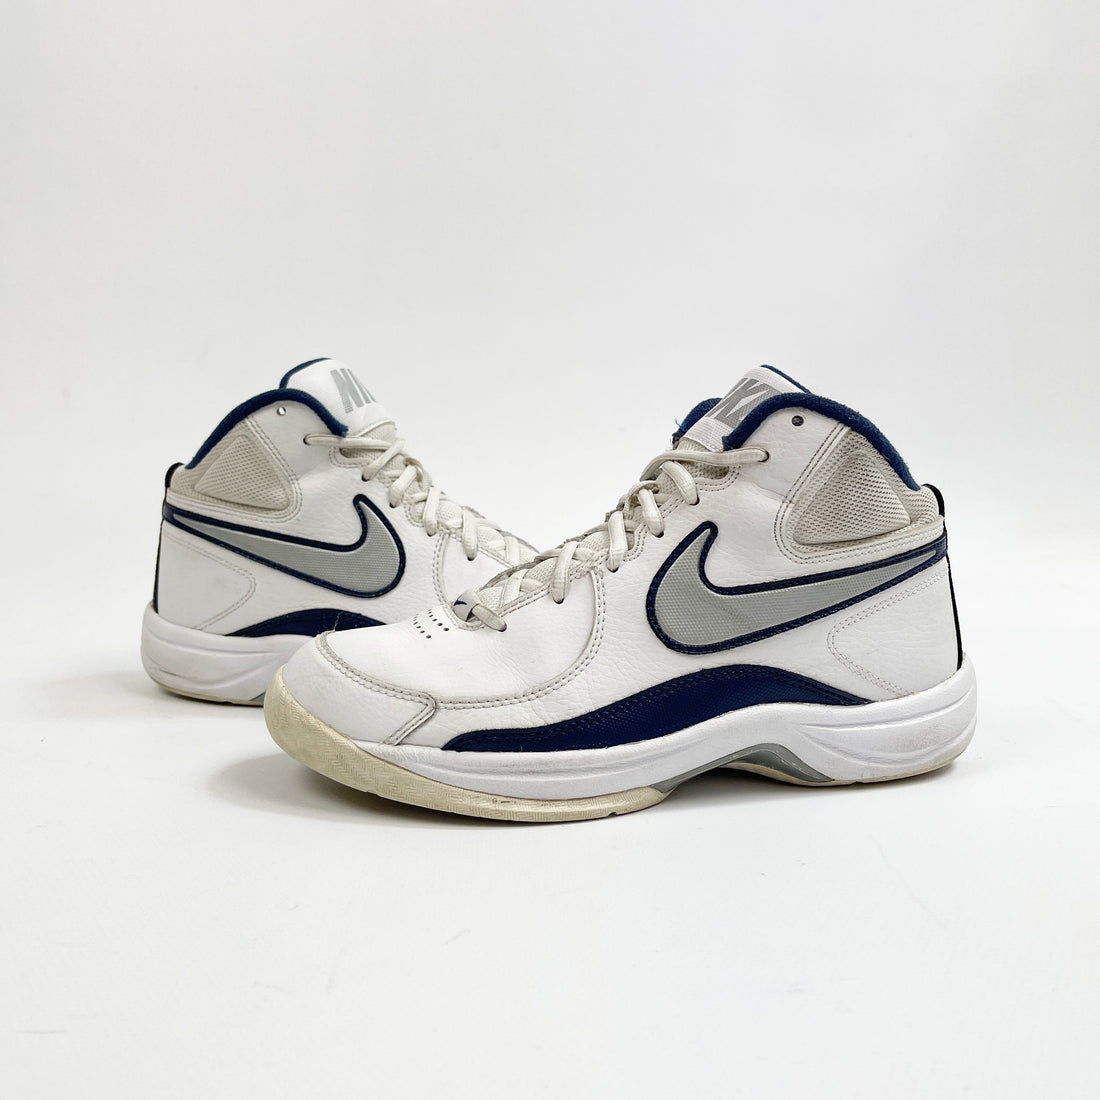 Nike Overplay VII White Blue 2012